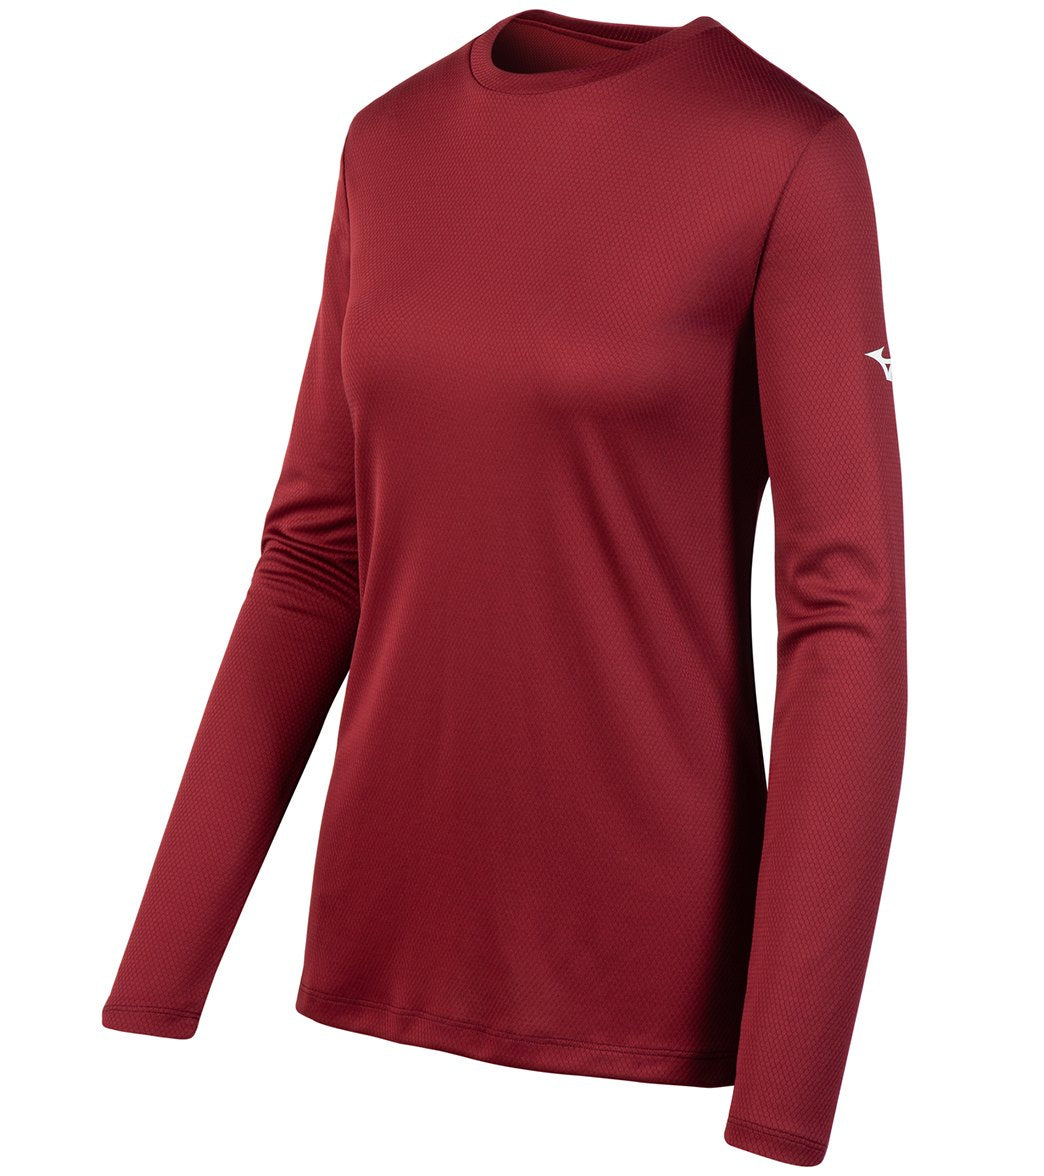 Mizuno Women's Long Sleeve Tee Shirt - Cardinal Large Polyester - Swimoutlet.com